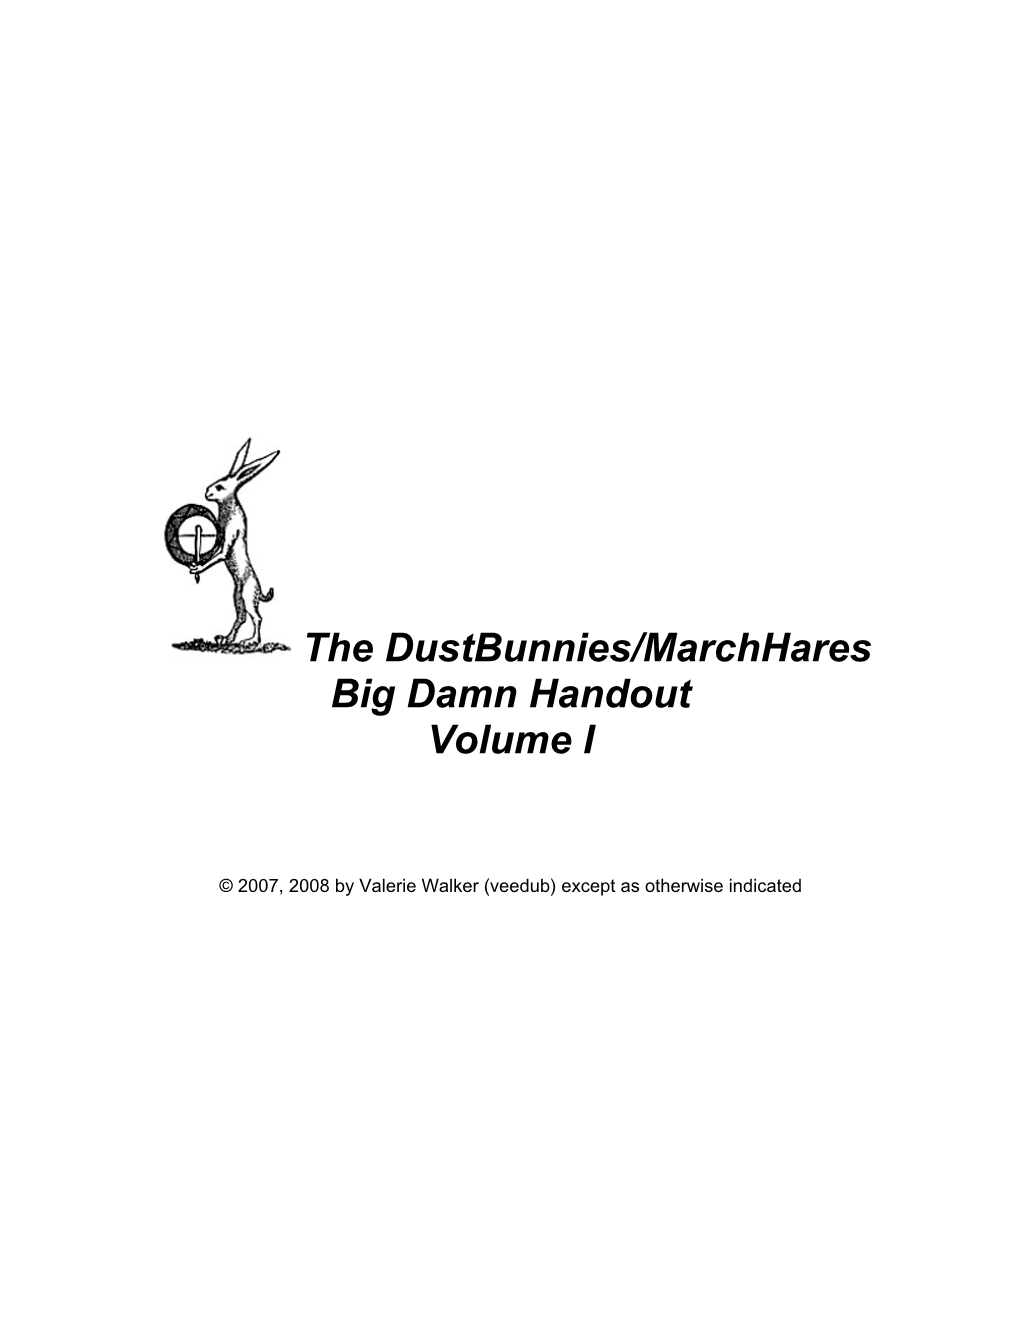 The Dustbunnies/Marchhares Big Damn Handout Volume I